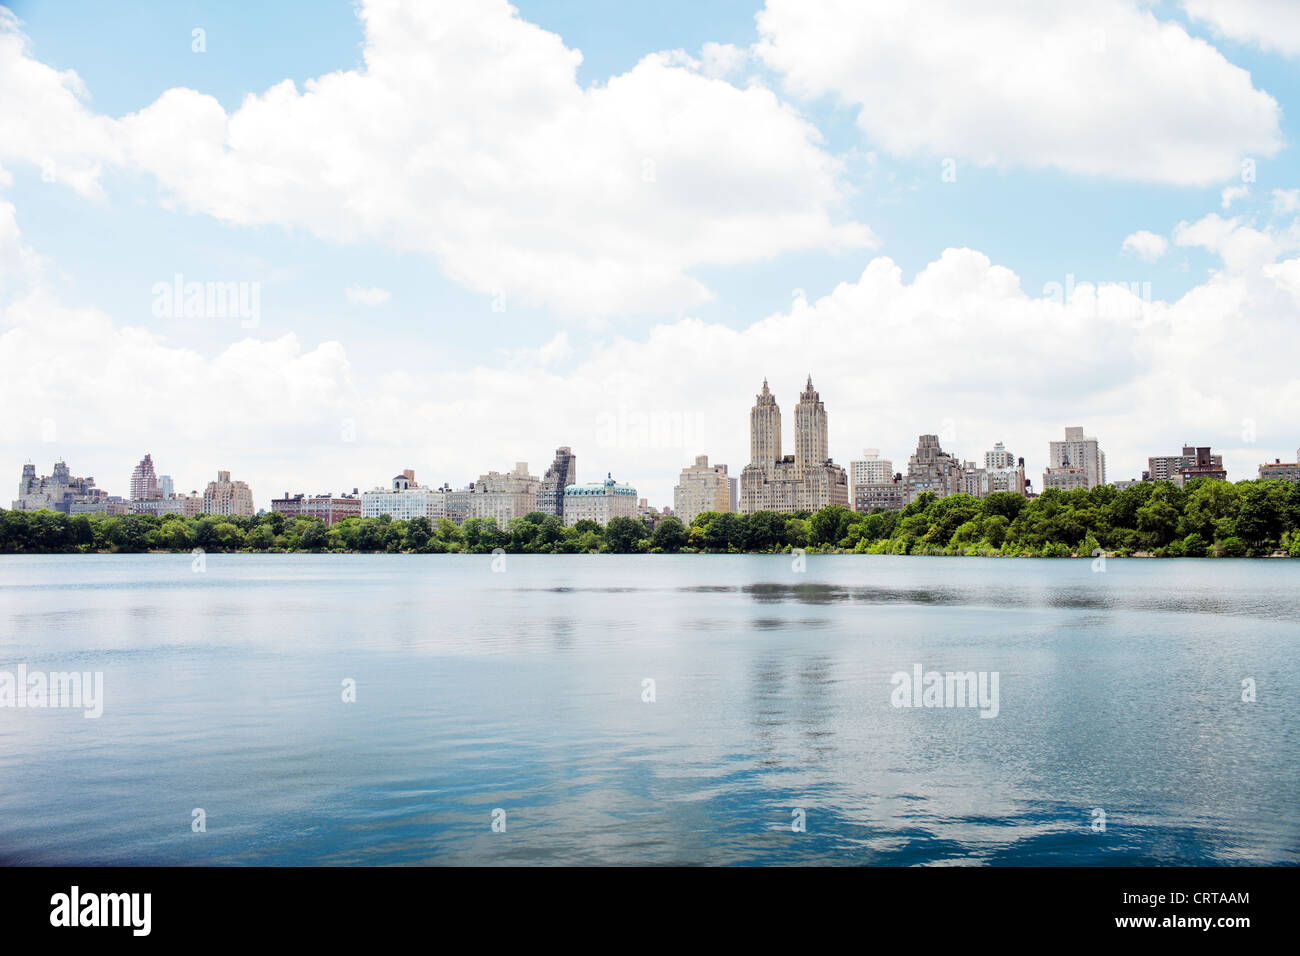 Jacqueline Kennedy Onassis Reservoir Réservoir AKA Central Park in Central Park, New York City, USA. Banque D'Images